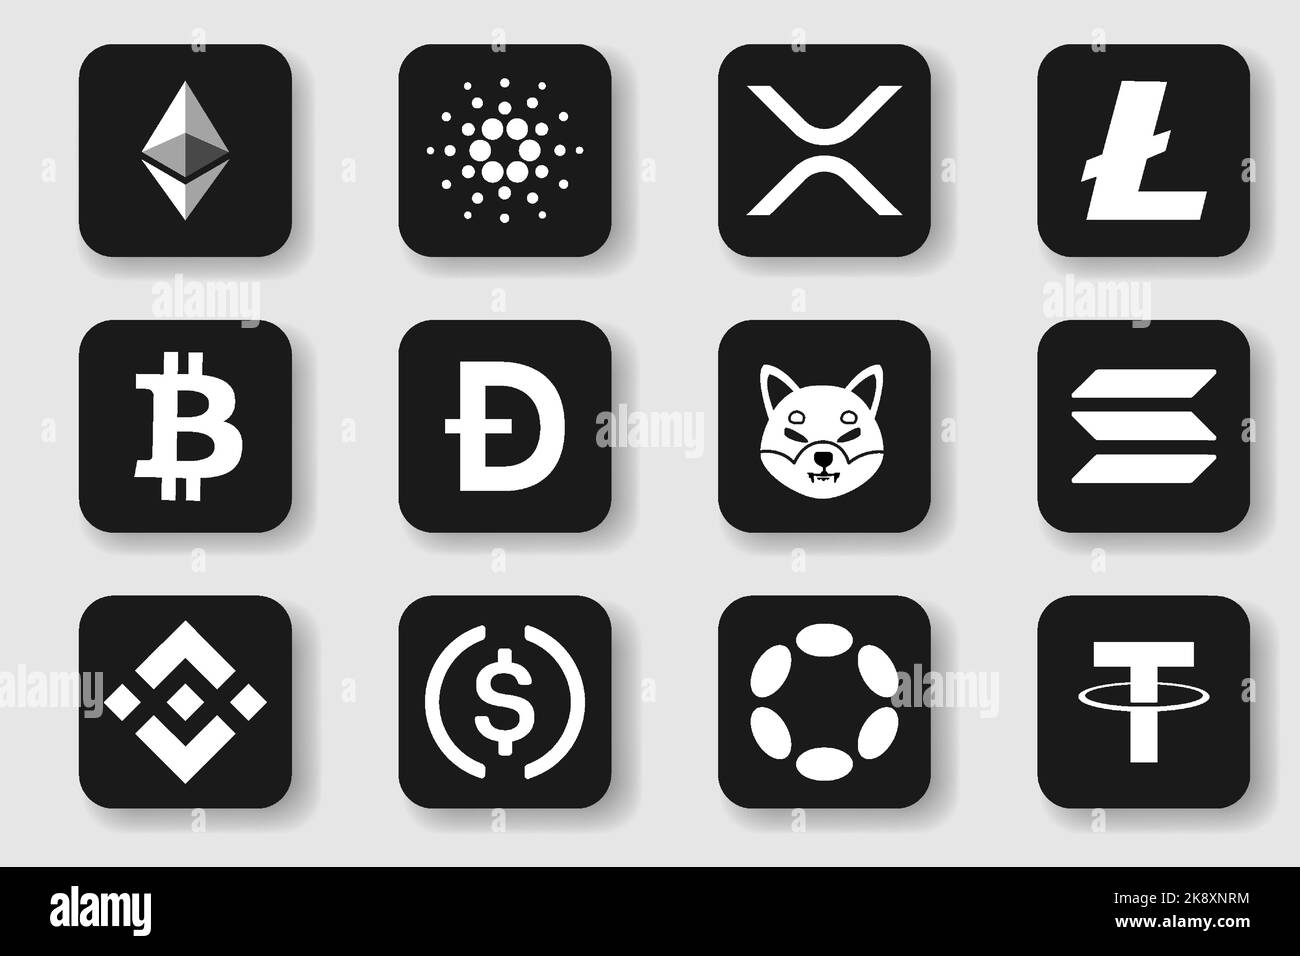 Cryptocurrency logo set. Set of cryptocurrency icons. Bitcoin, Ethereum, Cardano, Binance, Tether,Uniswap, Polkadot, Dogecoin, XRP, Litecoin Stock Vector